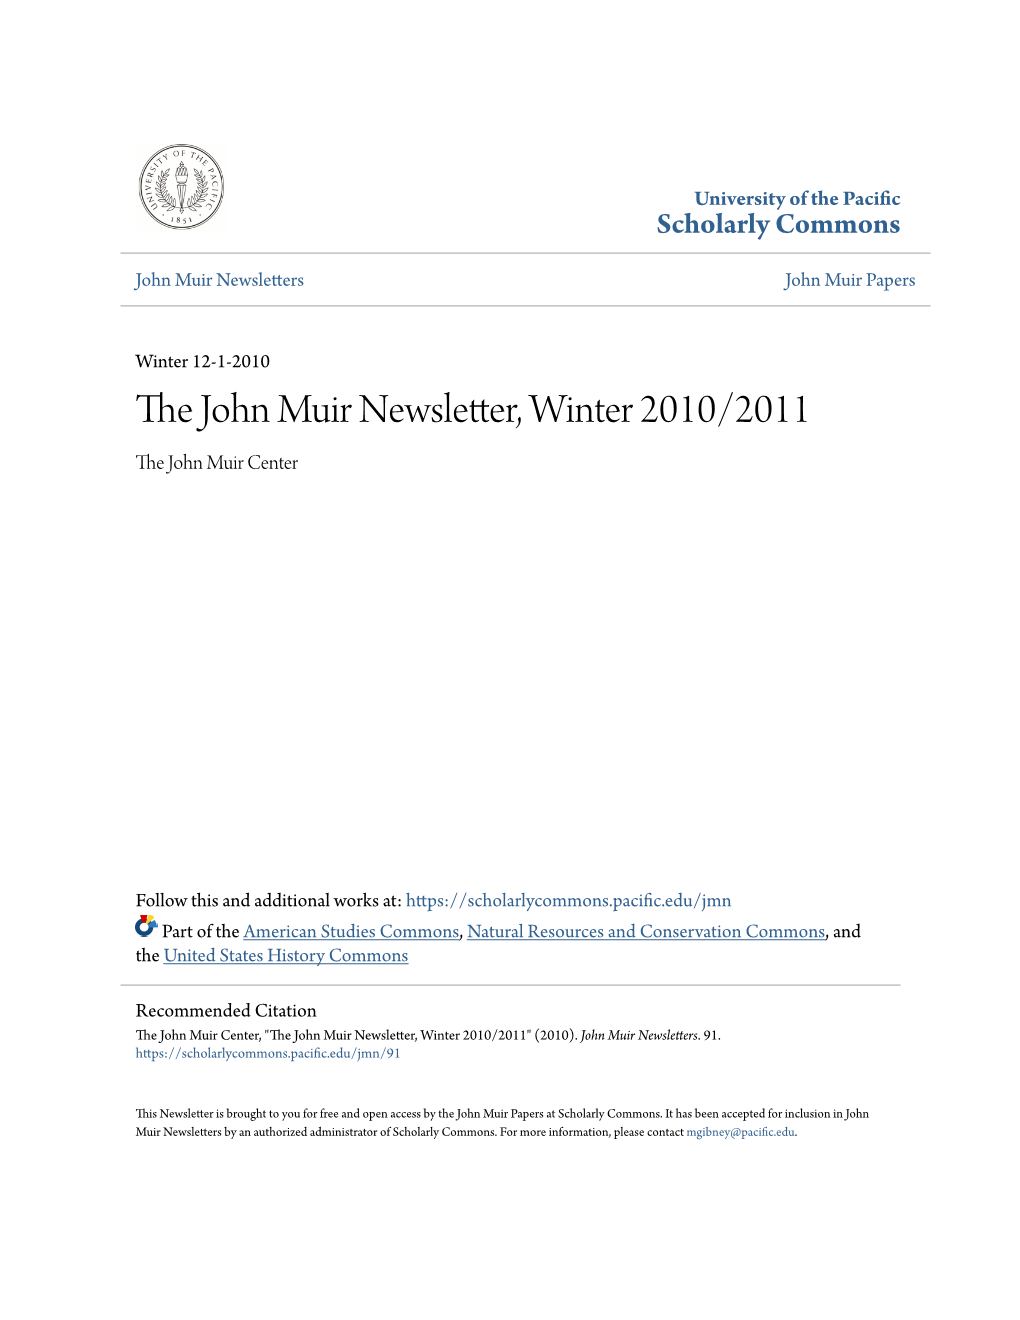 The John Muir Newsletter, Winter 2010/2011